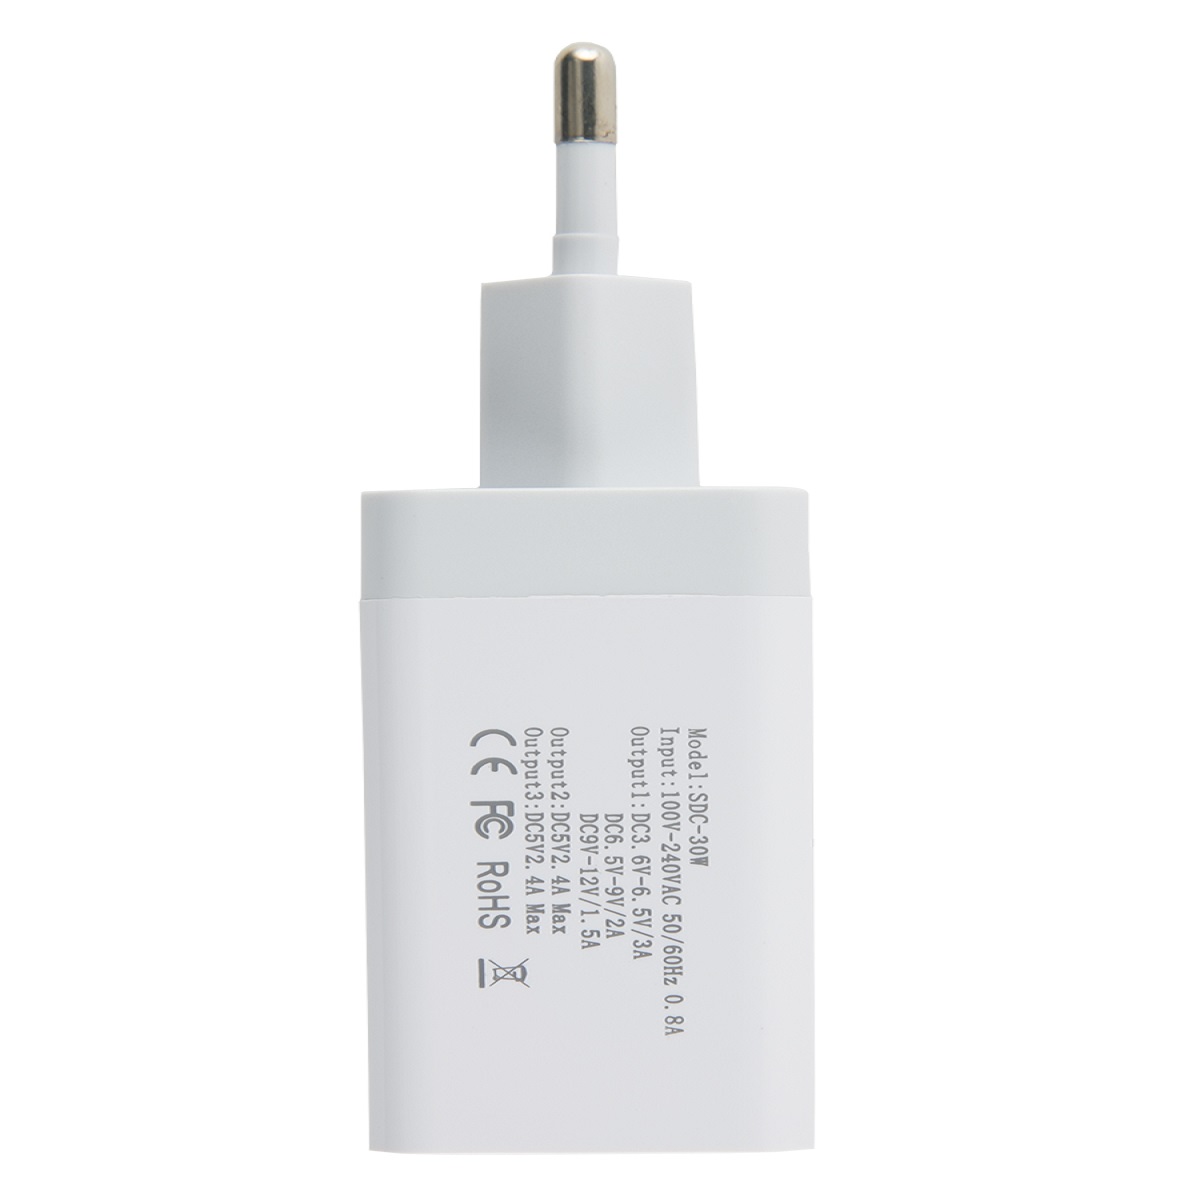 Зарядное устройство mObility сетевое mt-27 3 USB QC 3.0 белый - фото 2